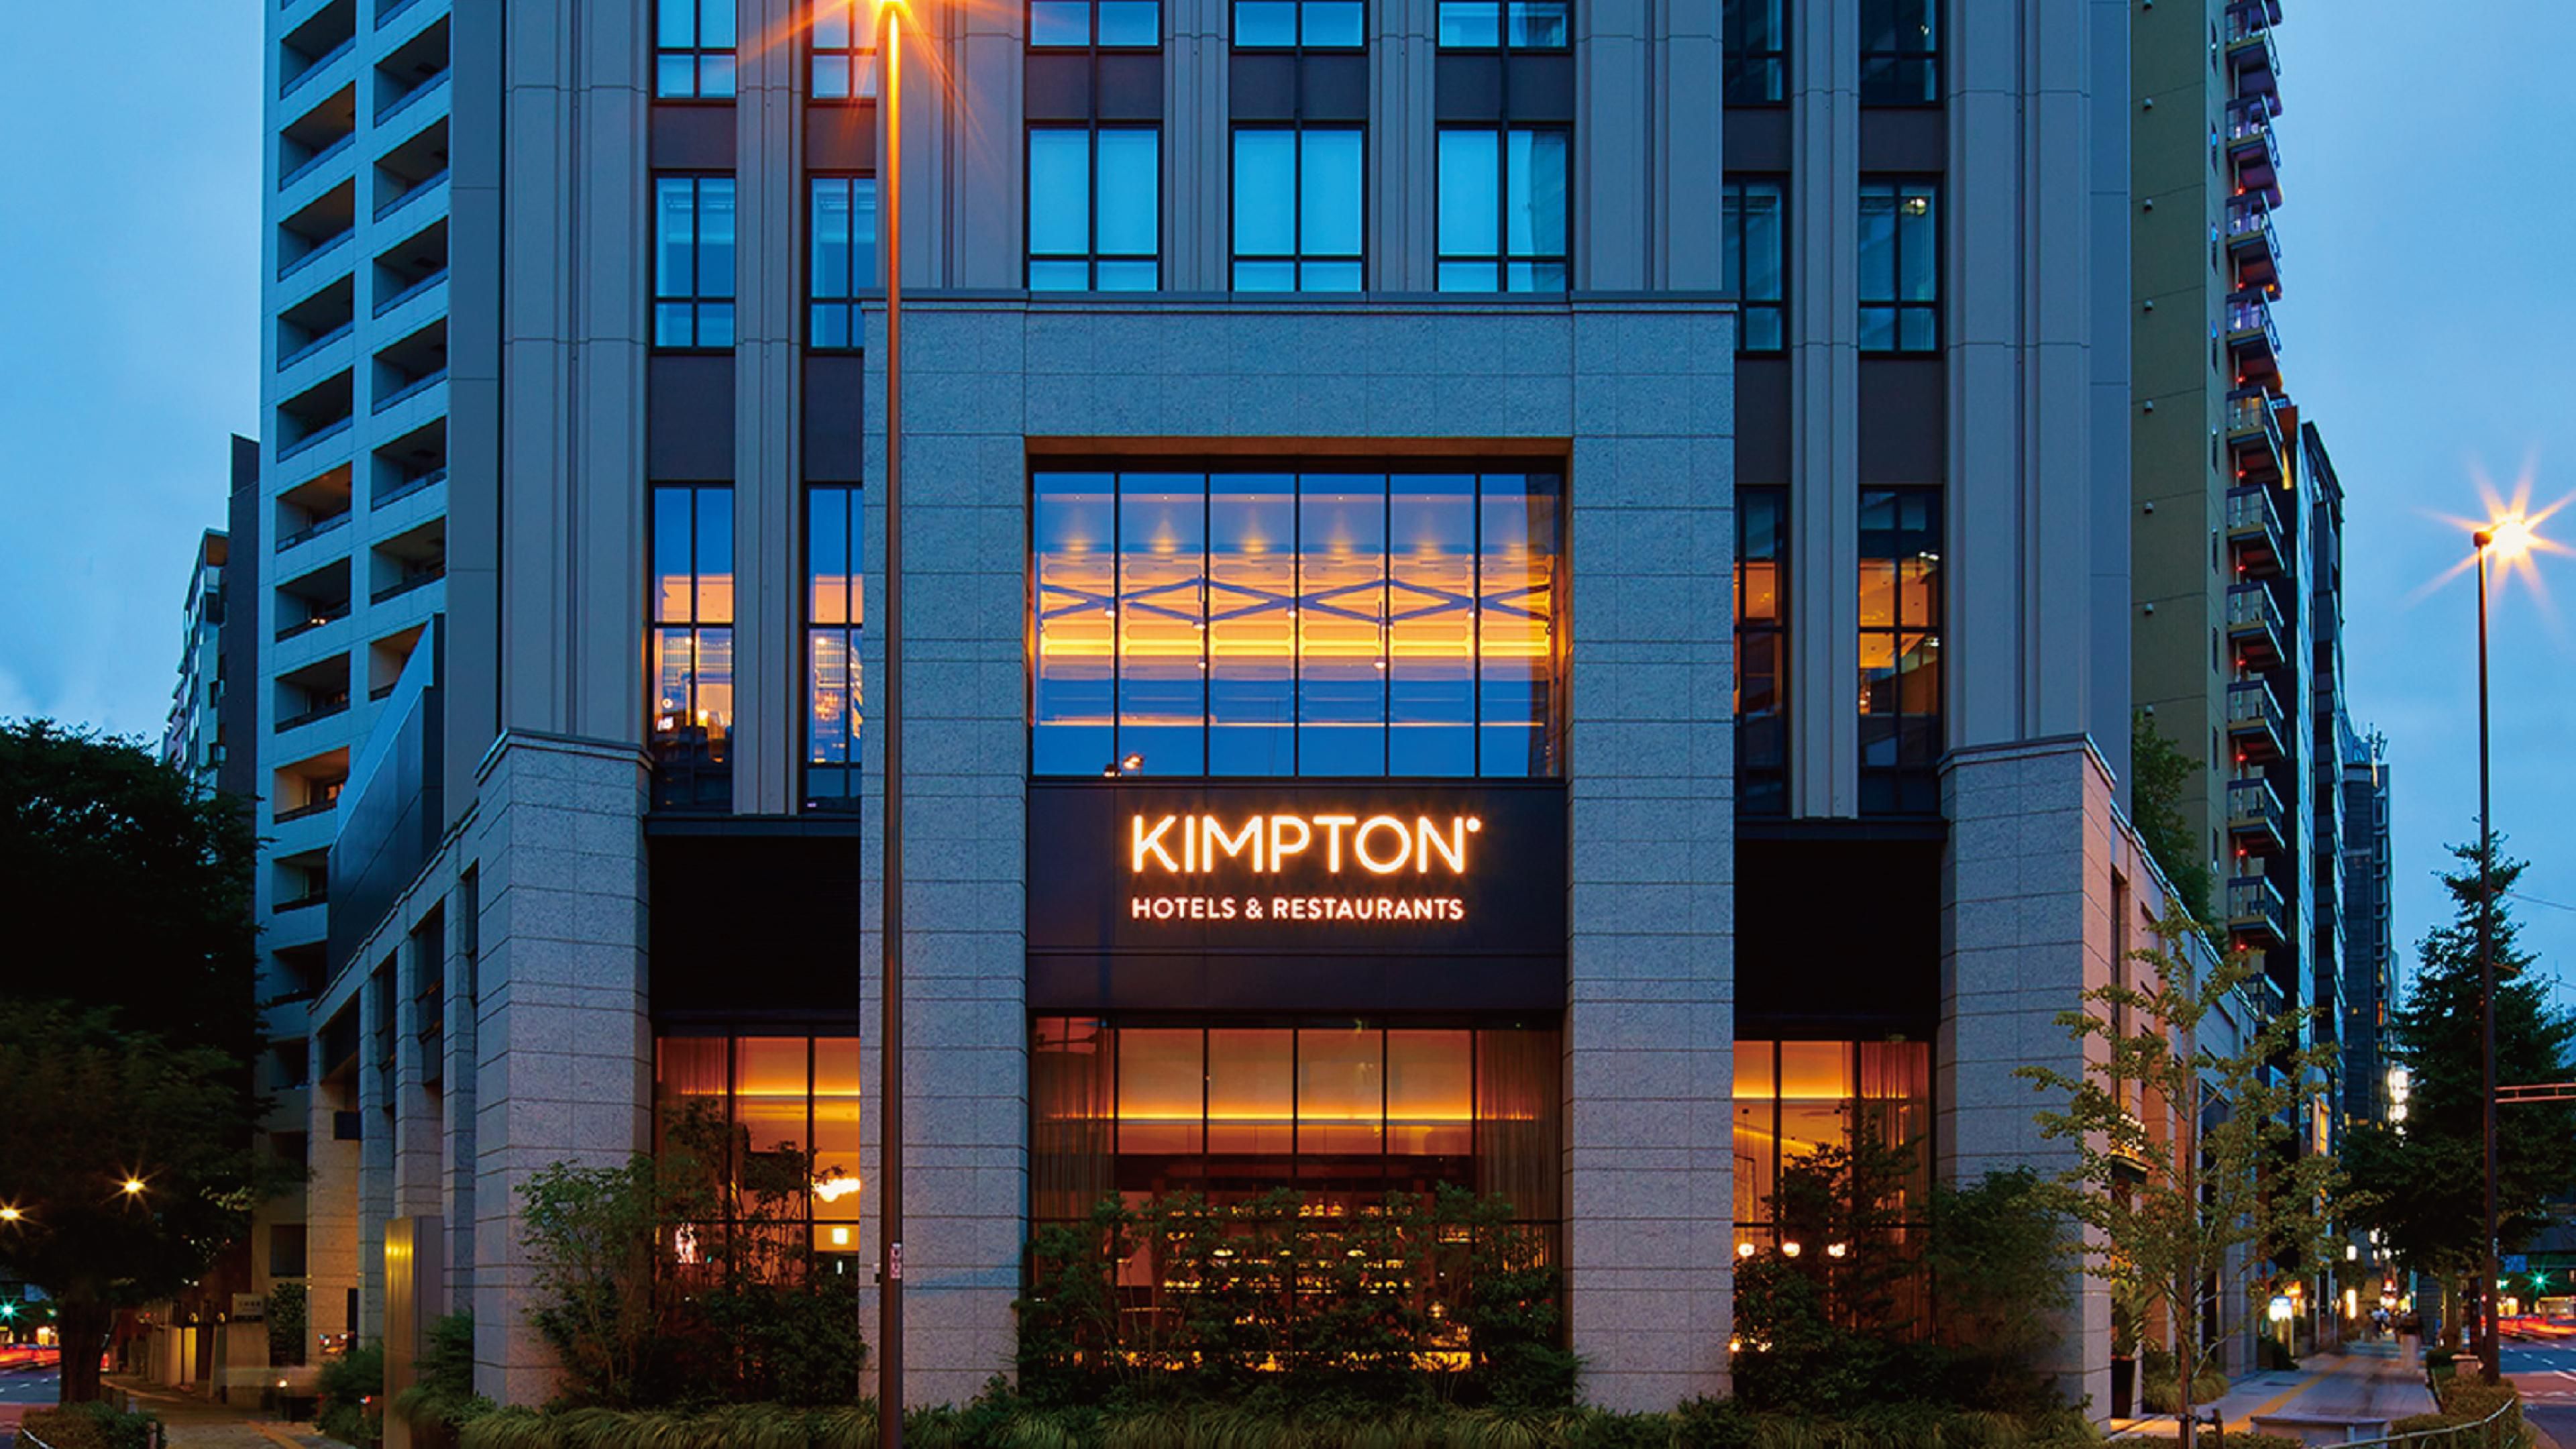 Kimpton Careers